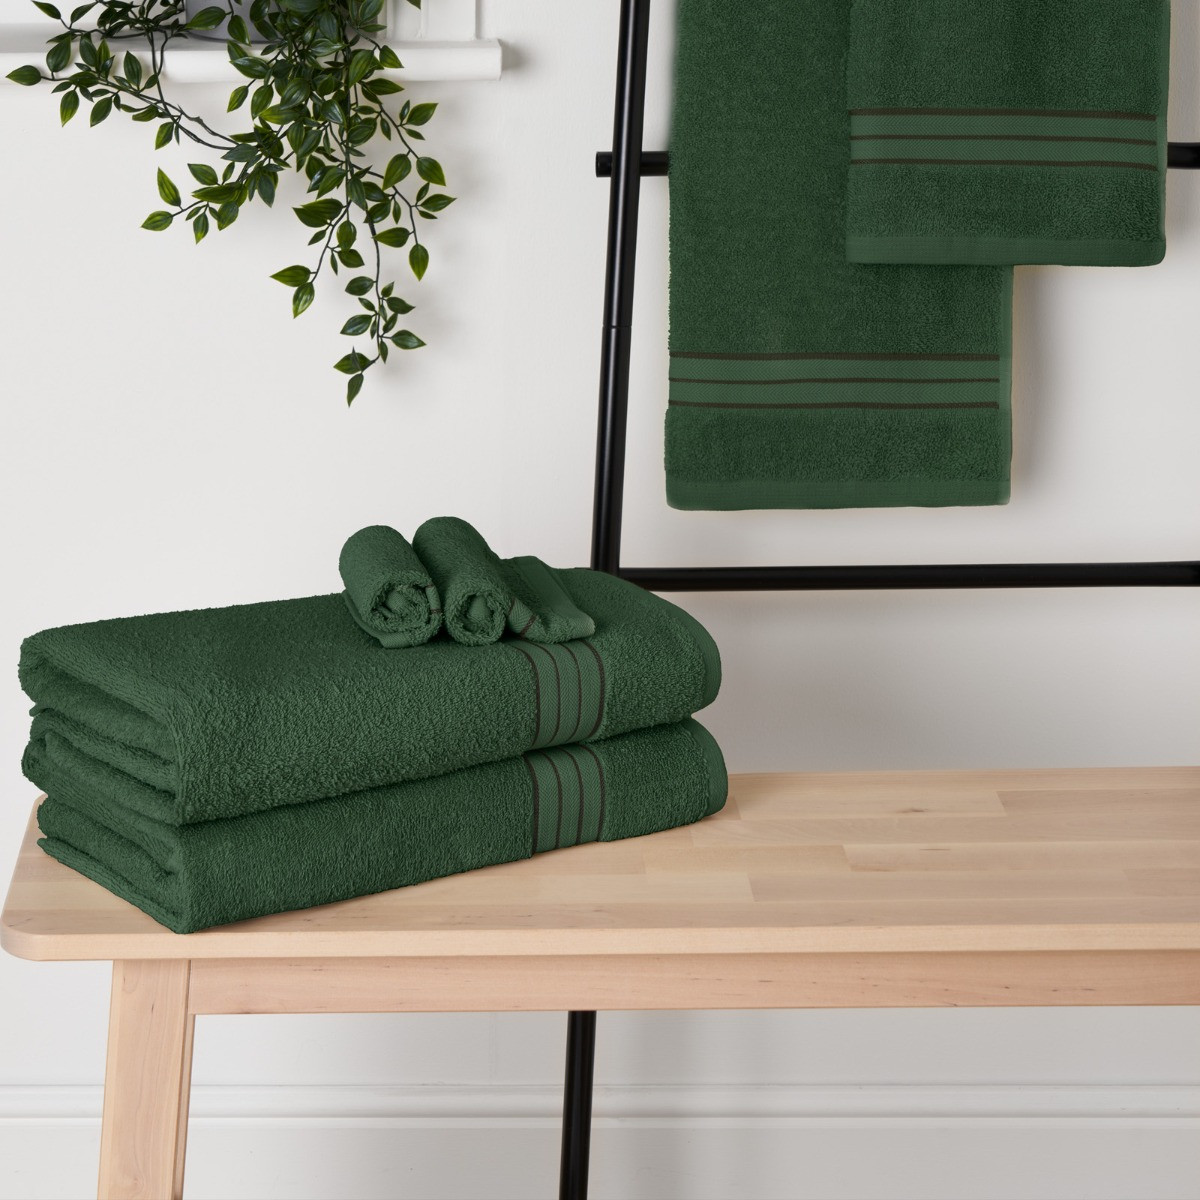 Brentfords 100% Cotton Bath Towel, Forest Green - 1PC>